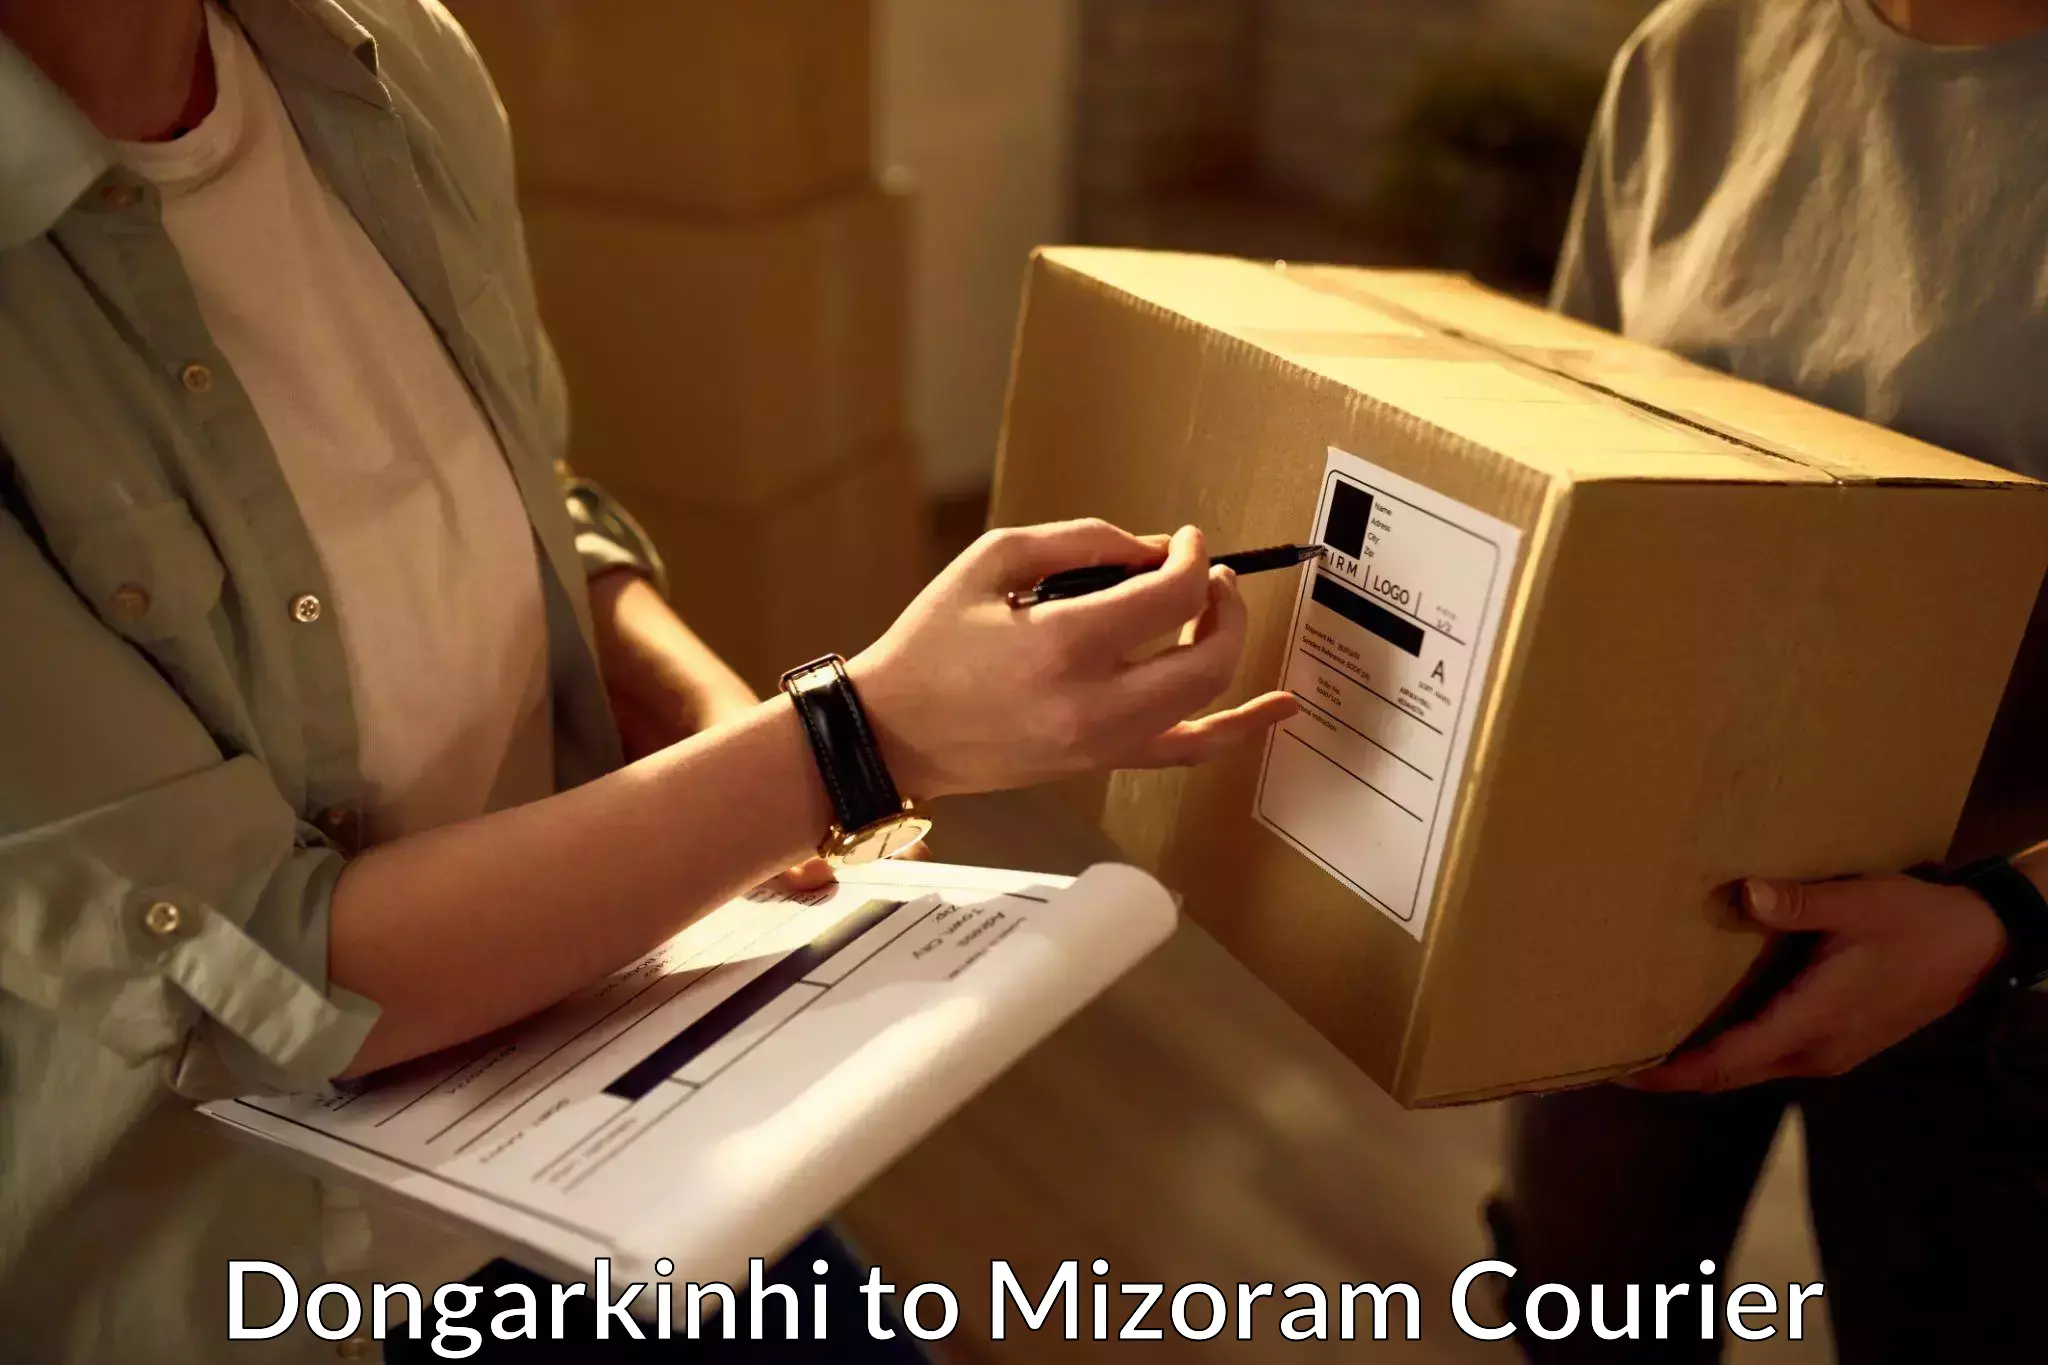 Courier service booking Dongarkinhi to Mizoram